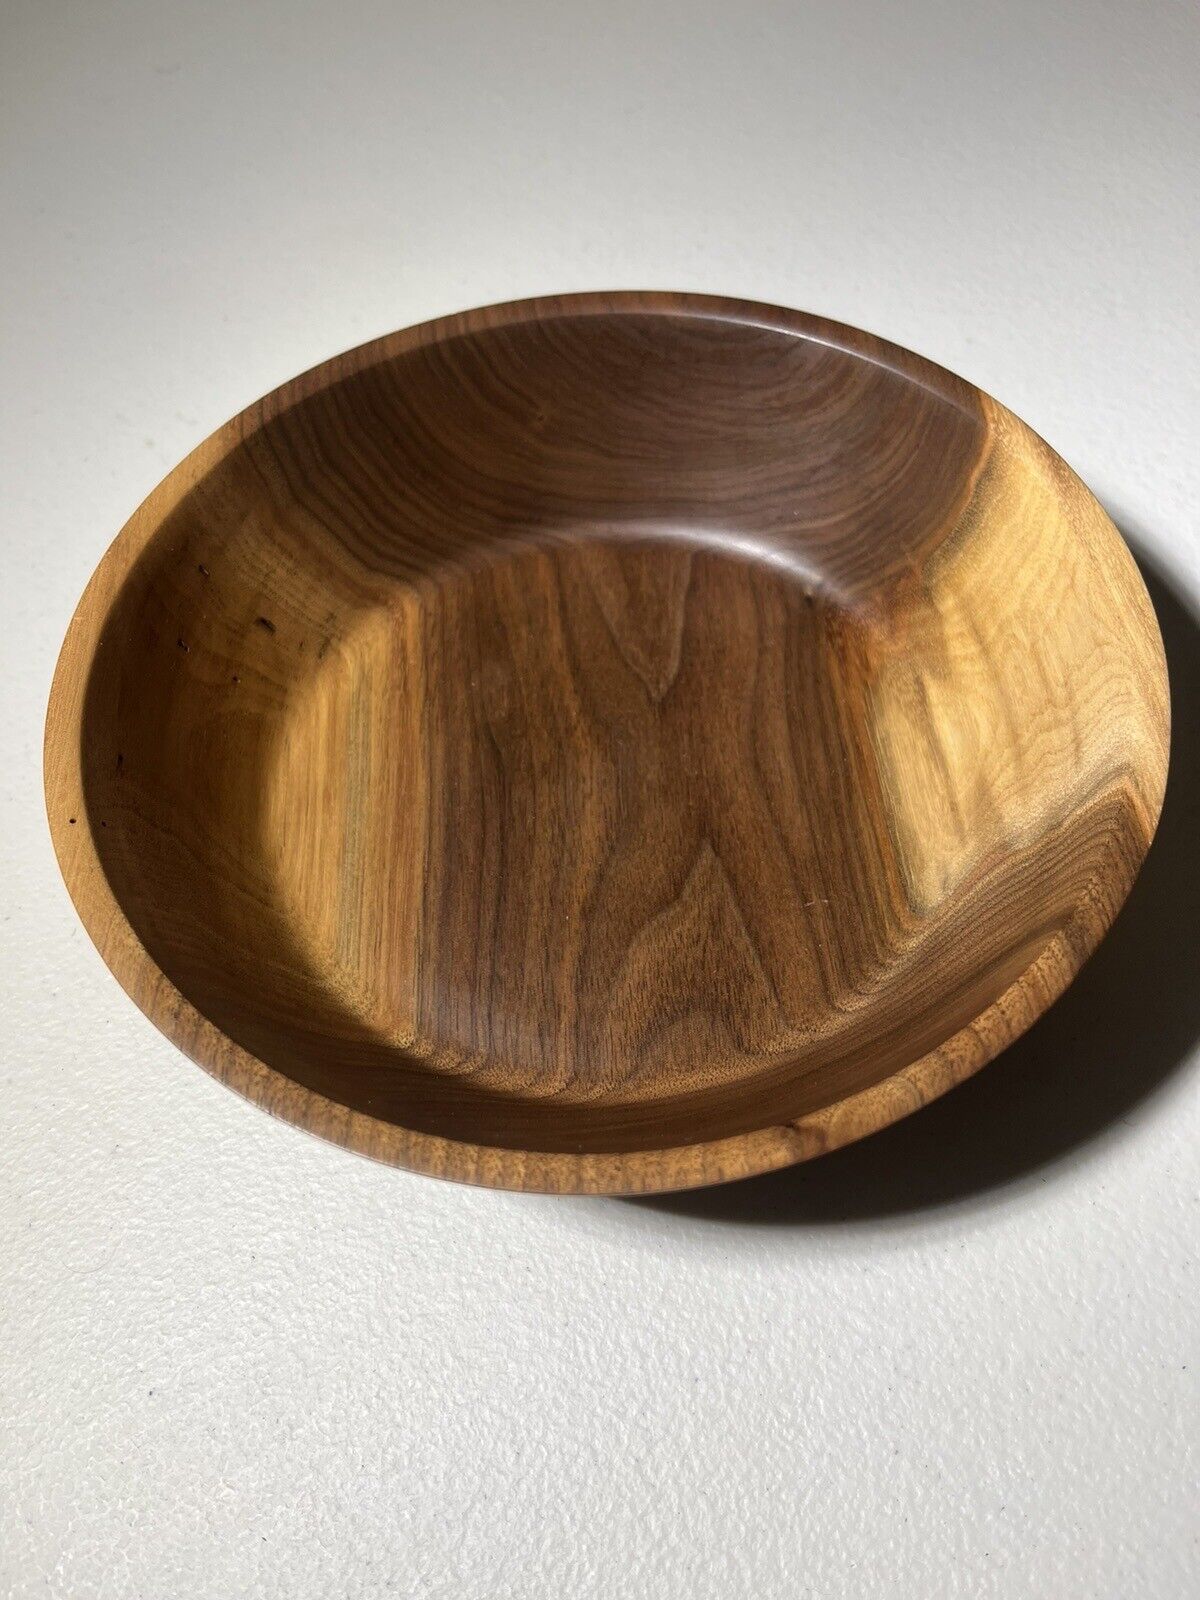 Handmade Black Walnut Bowl Made In Michigan Reclaimed Wood 7.25” NEW